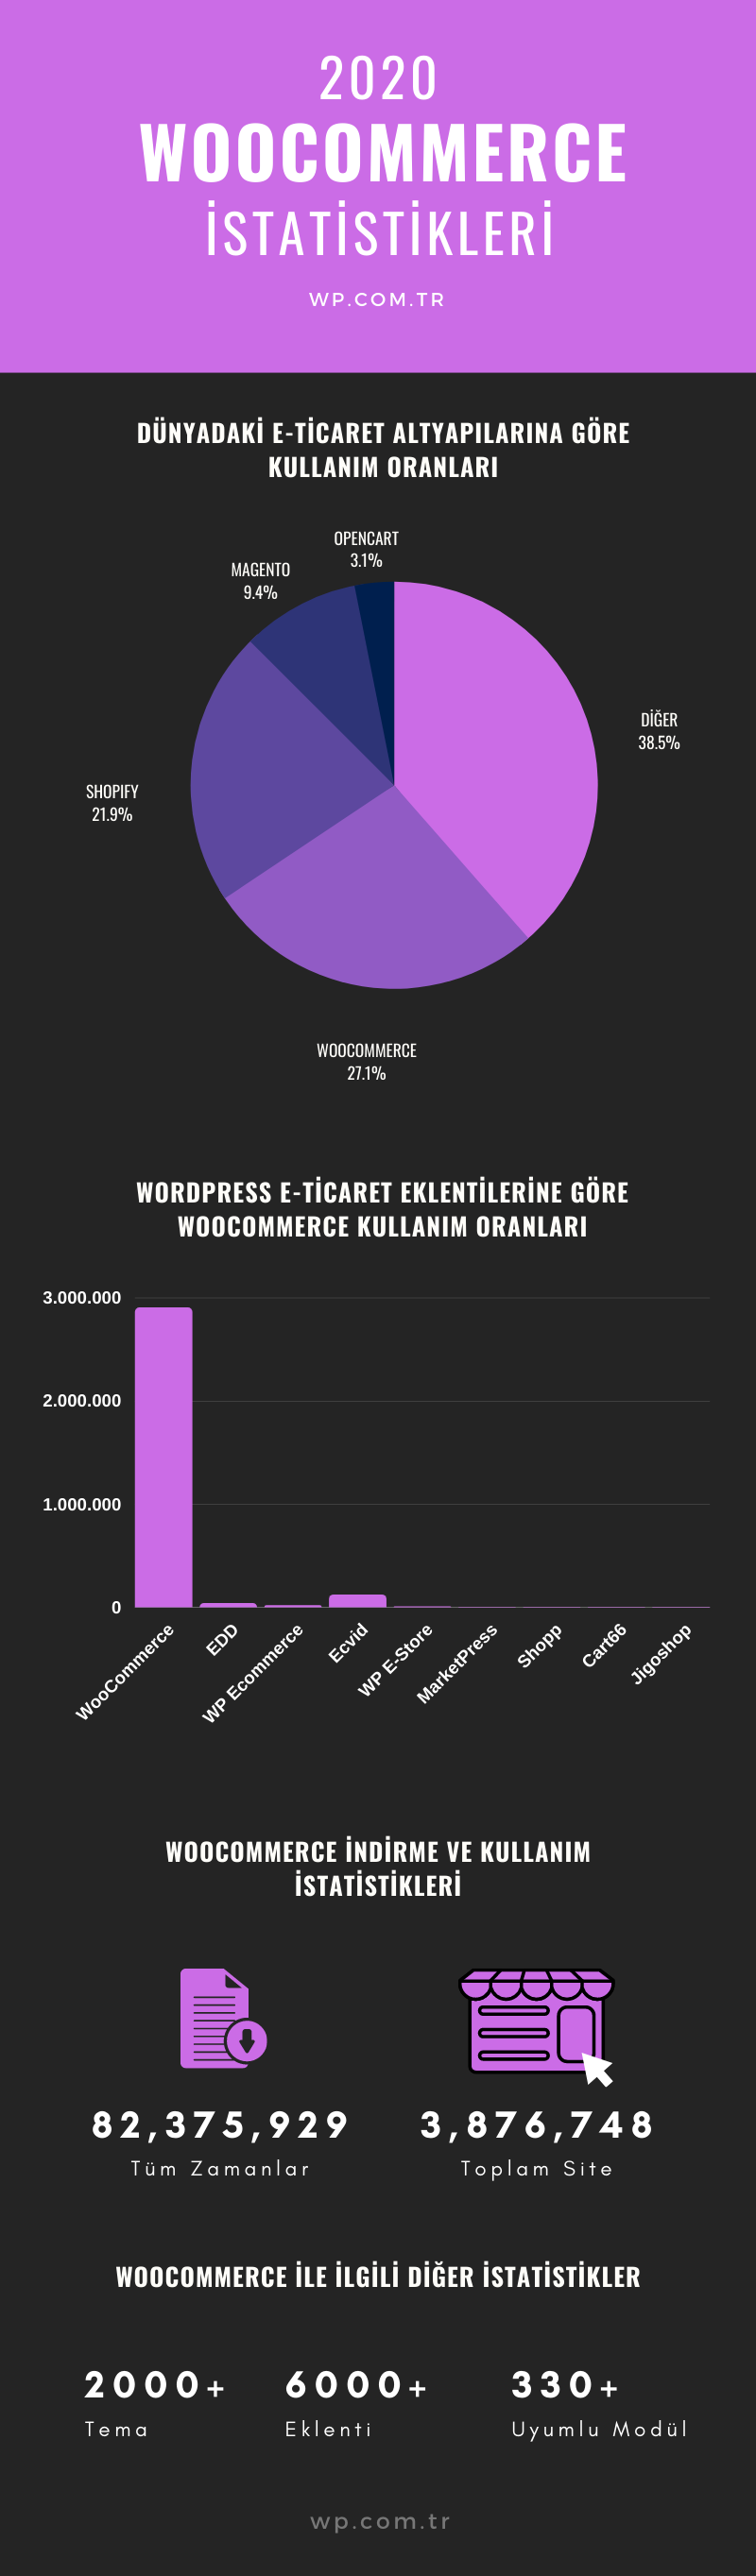 WooCommerce İstatistikleri (infografik)